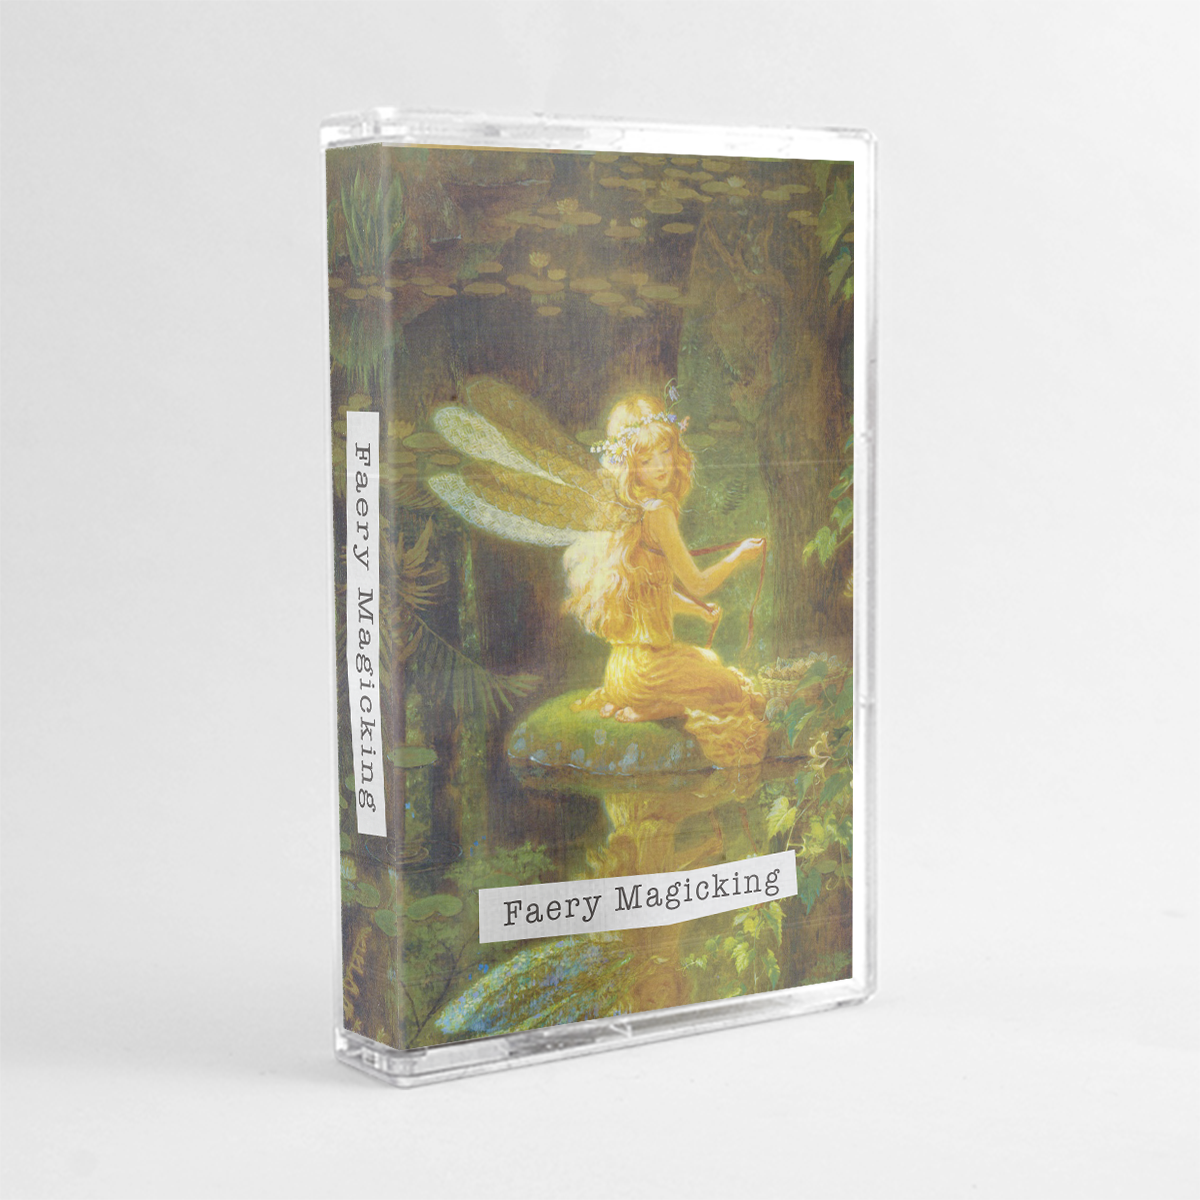 Faery Magicking - s/t cassette